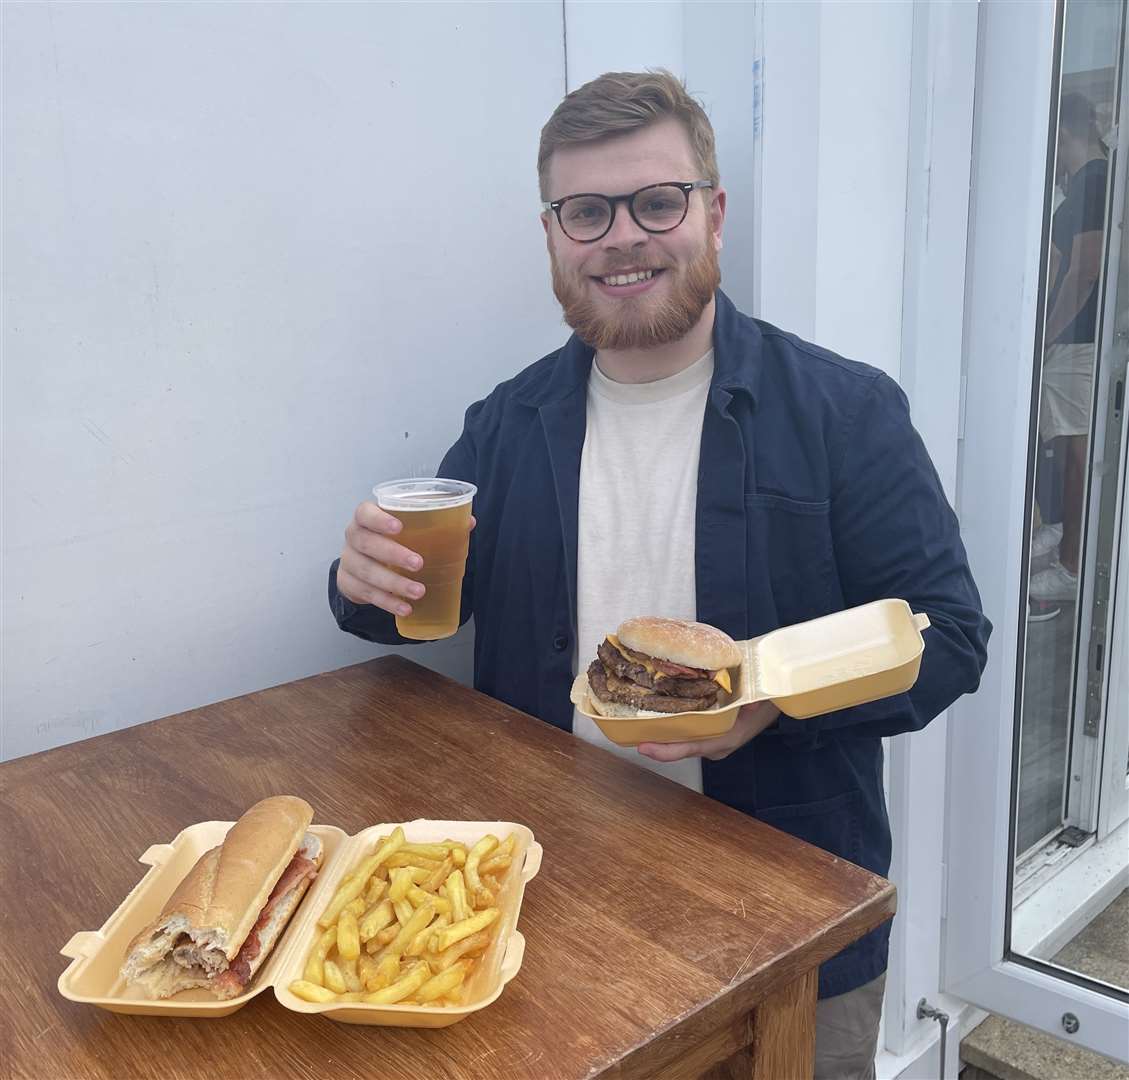 Reporter Sean McPolin enjoys a bite at Maidstone United's Gallagher Stadium